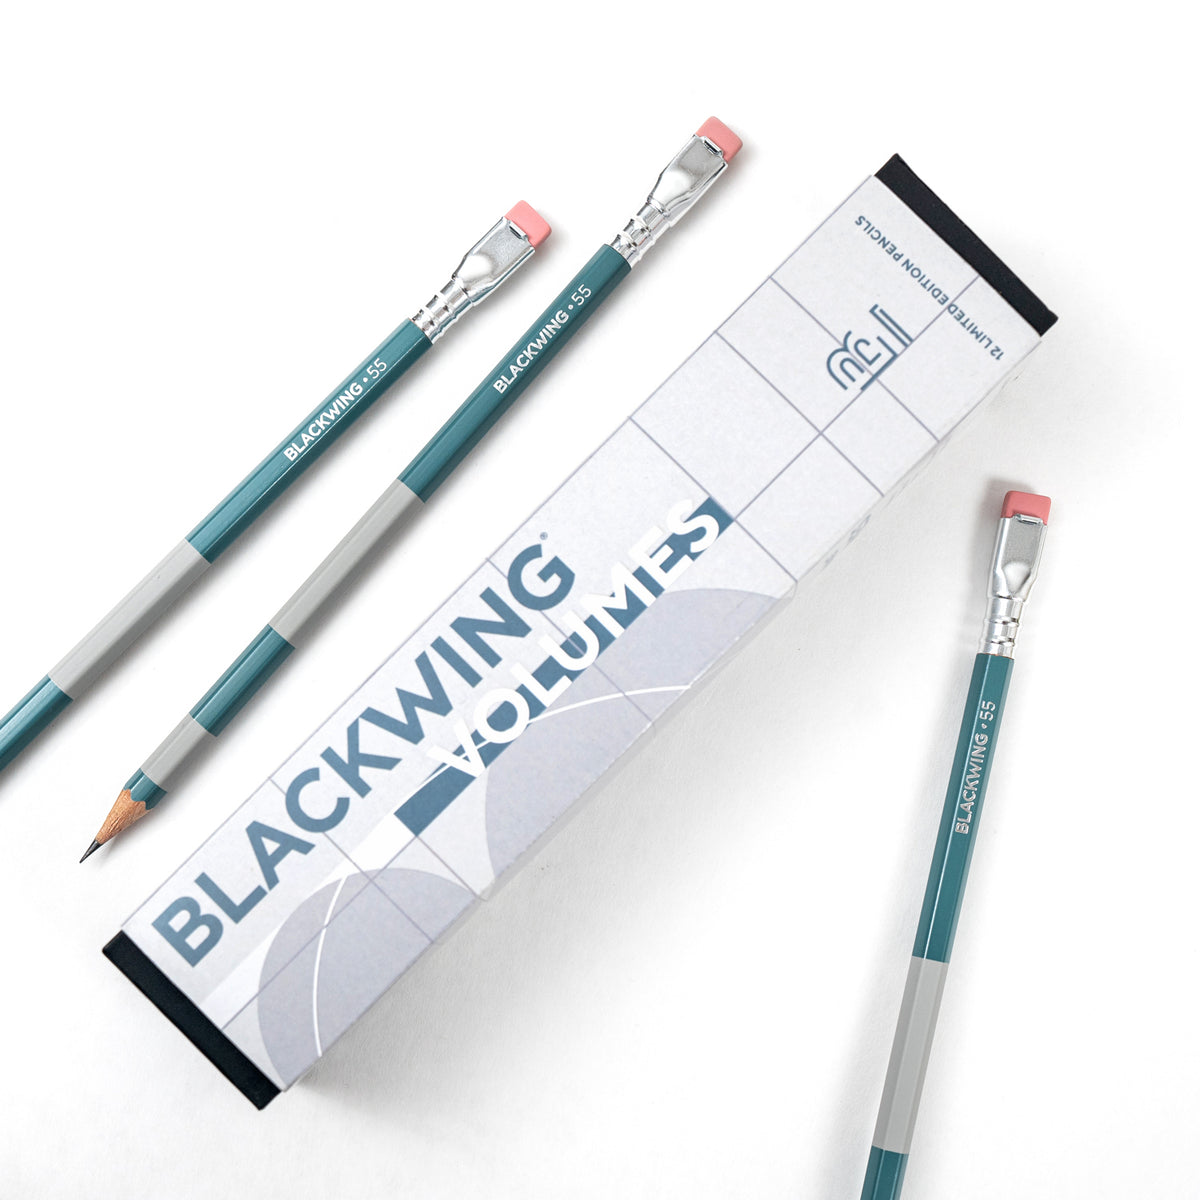 Blackwing Volumes #55 Pencils (Set of 12) - The Golden Ratio Pencil